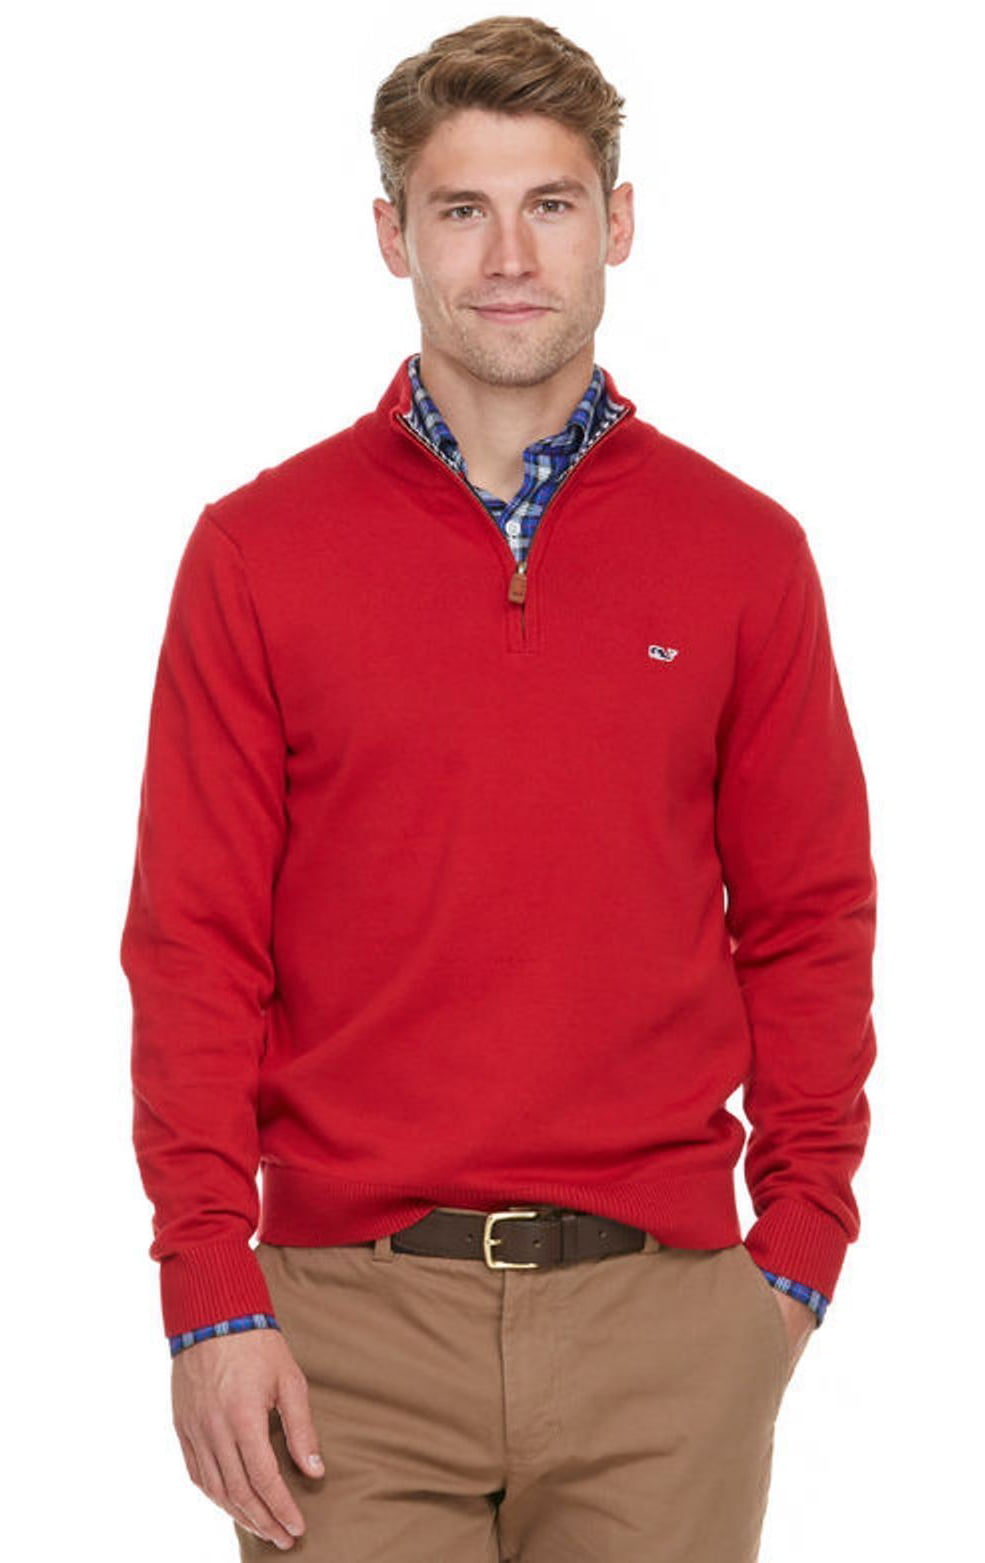 Vineyard Vines Men's Cotton Quarter Zip Sweater in Red Tomato Check ...